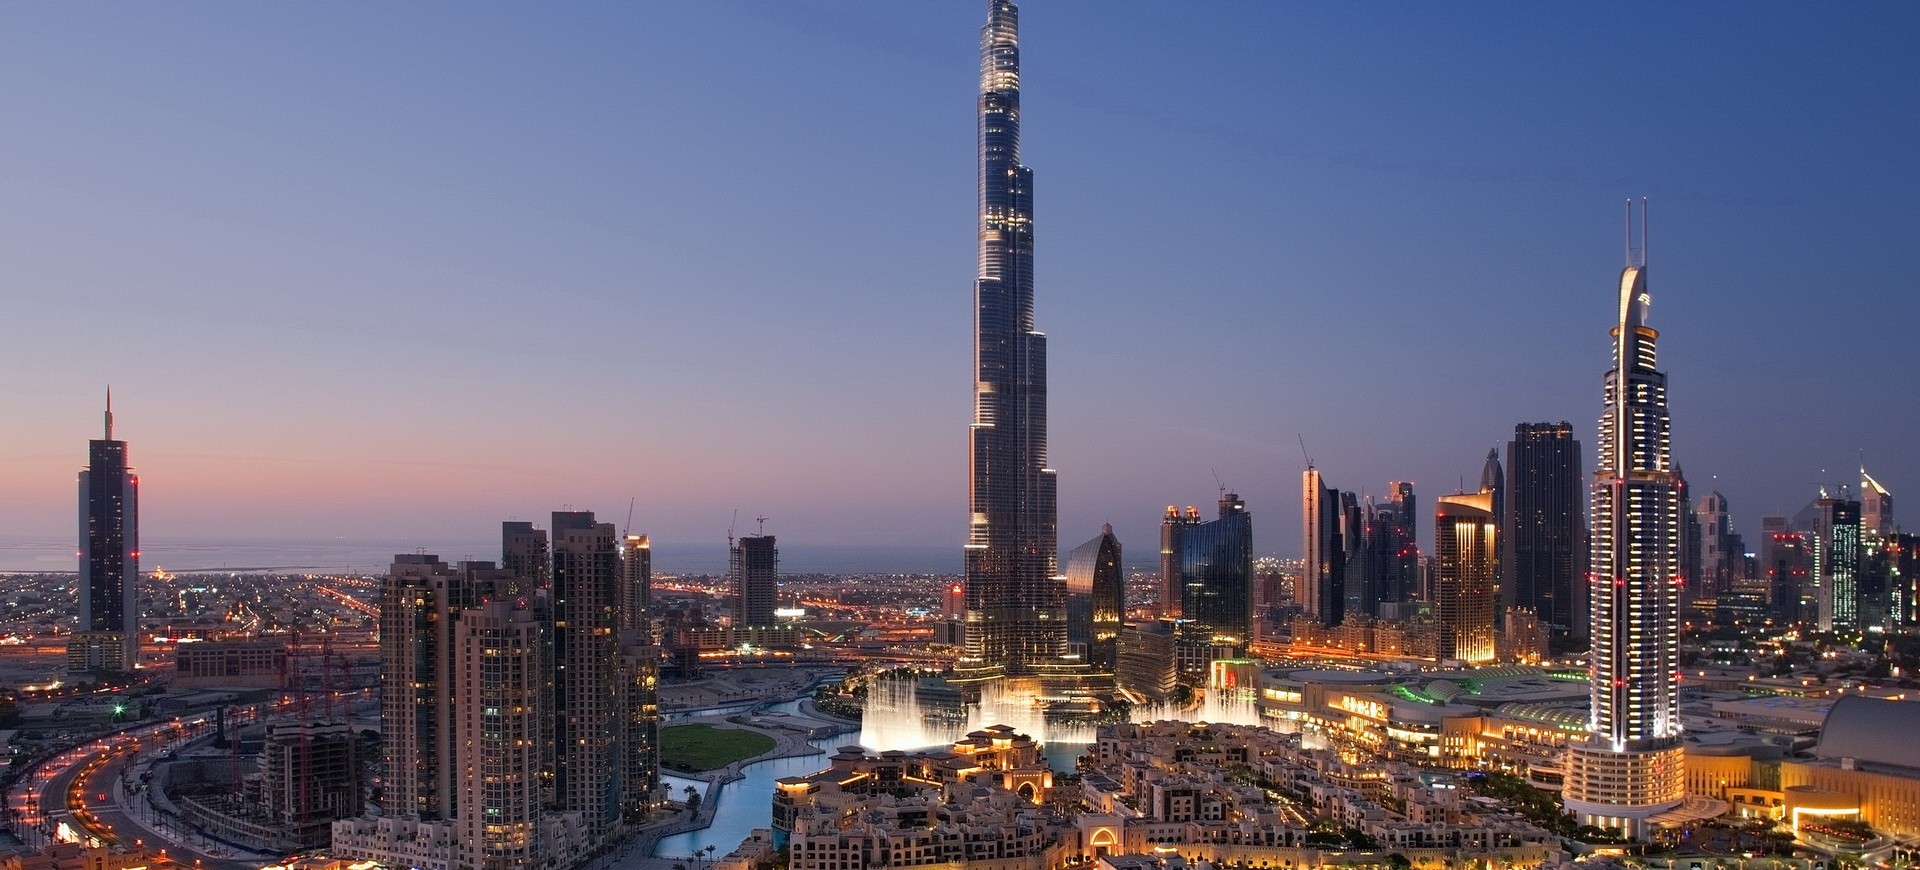 Dubai Burj Khalifa by night